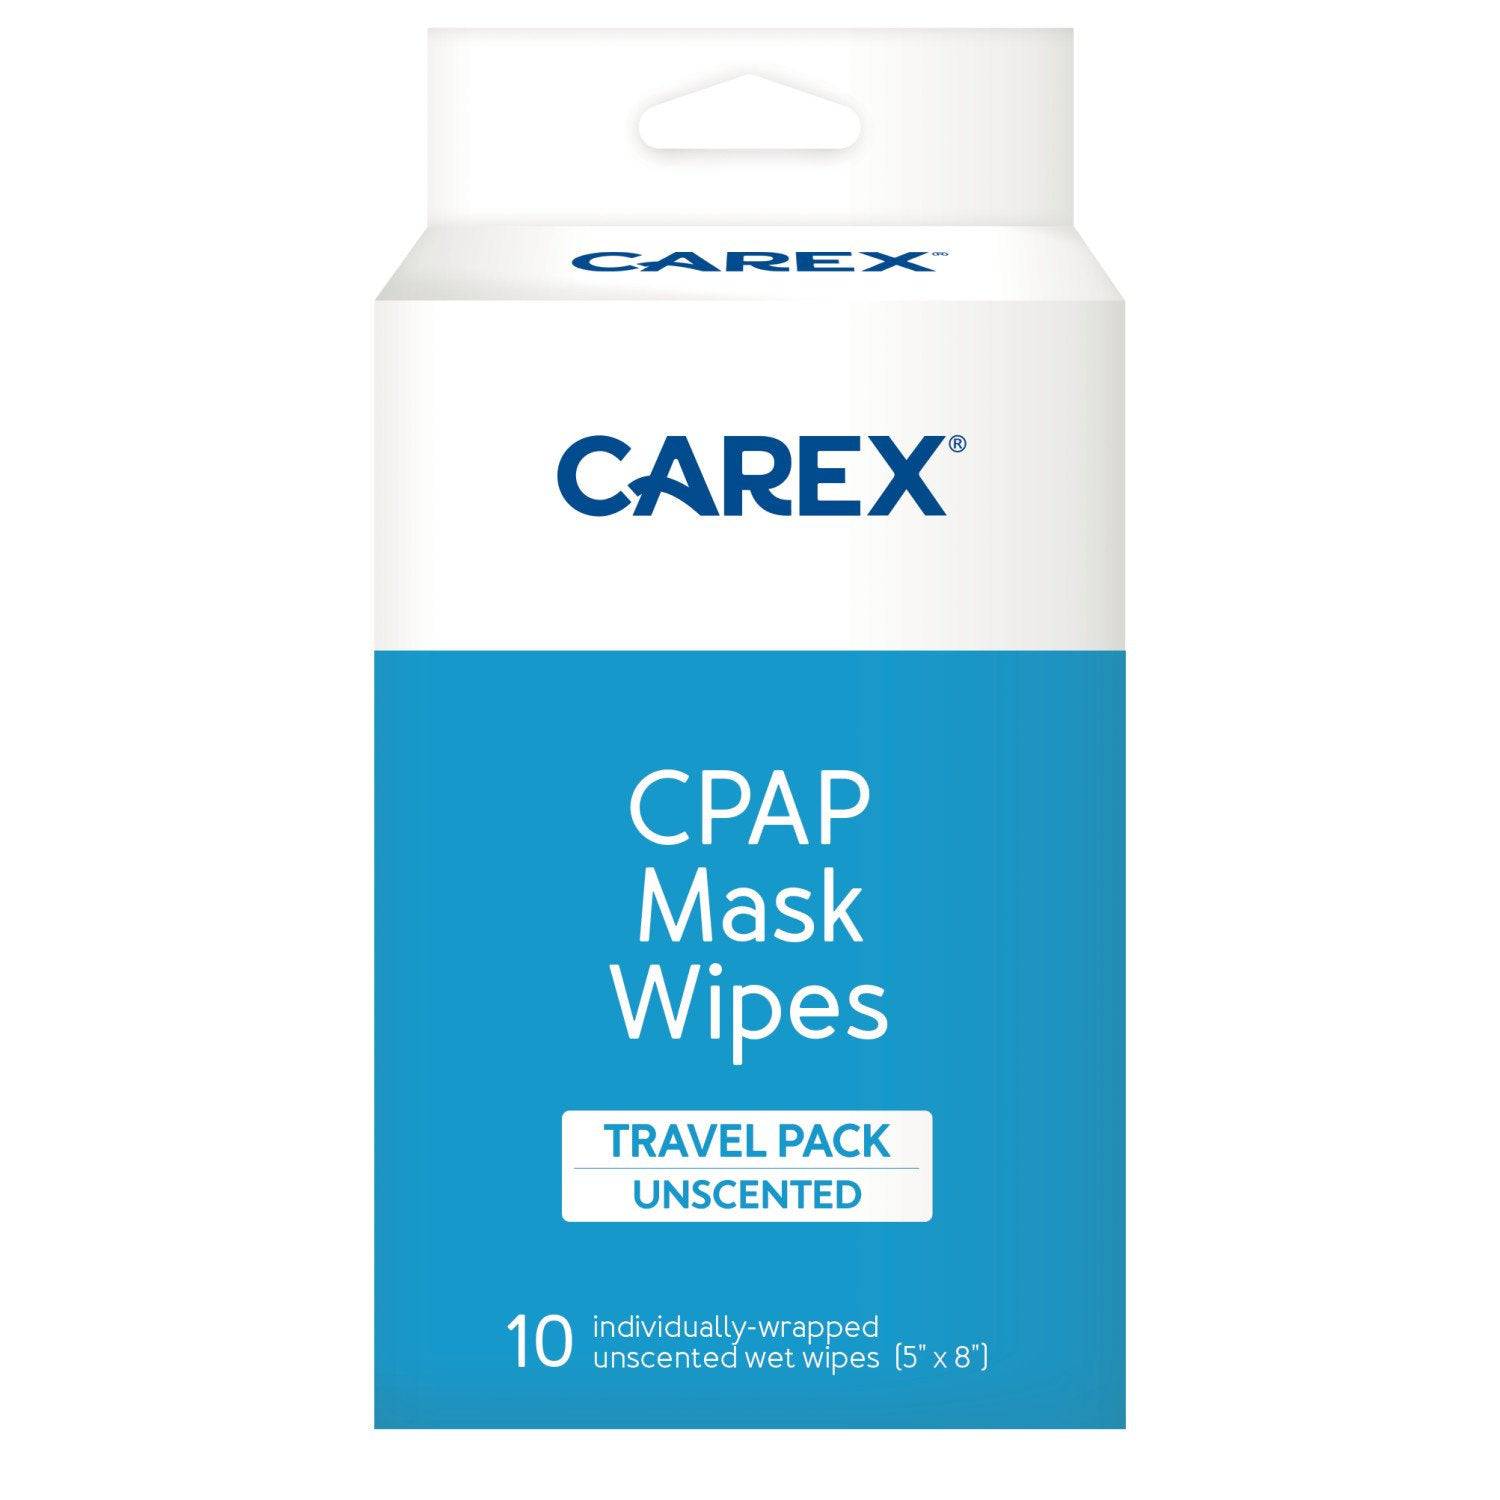 Carex CPAP Mask Wipes - Carex Health Brands